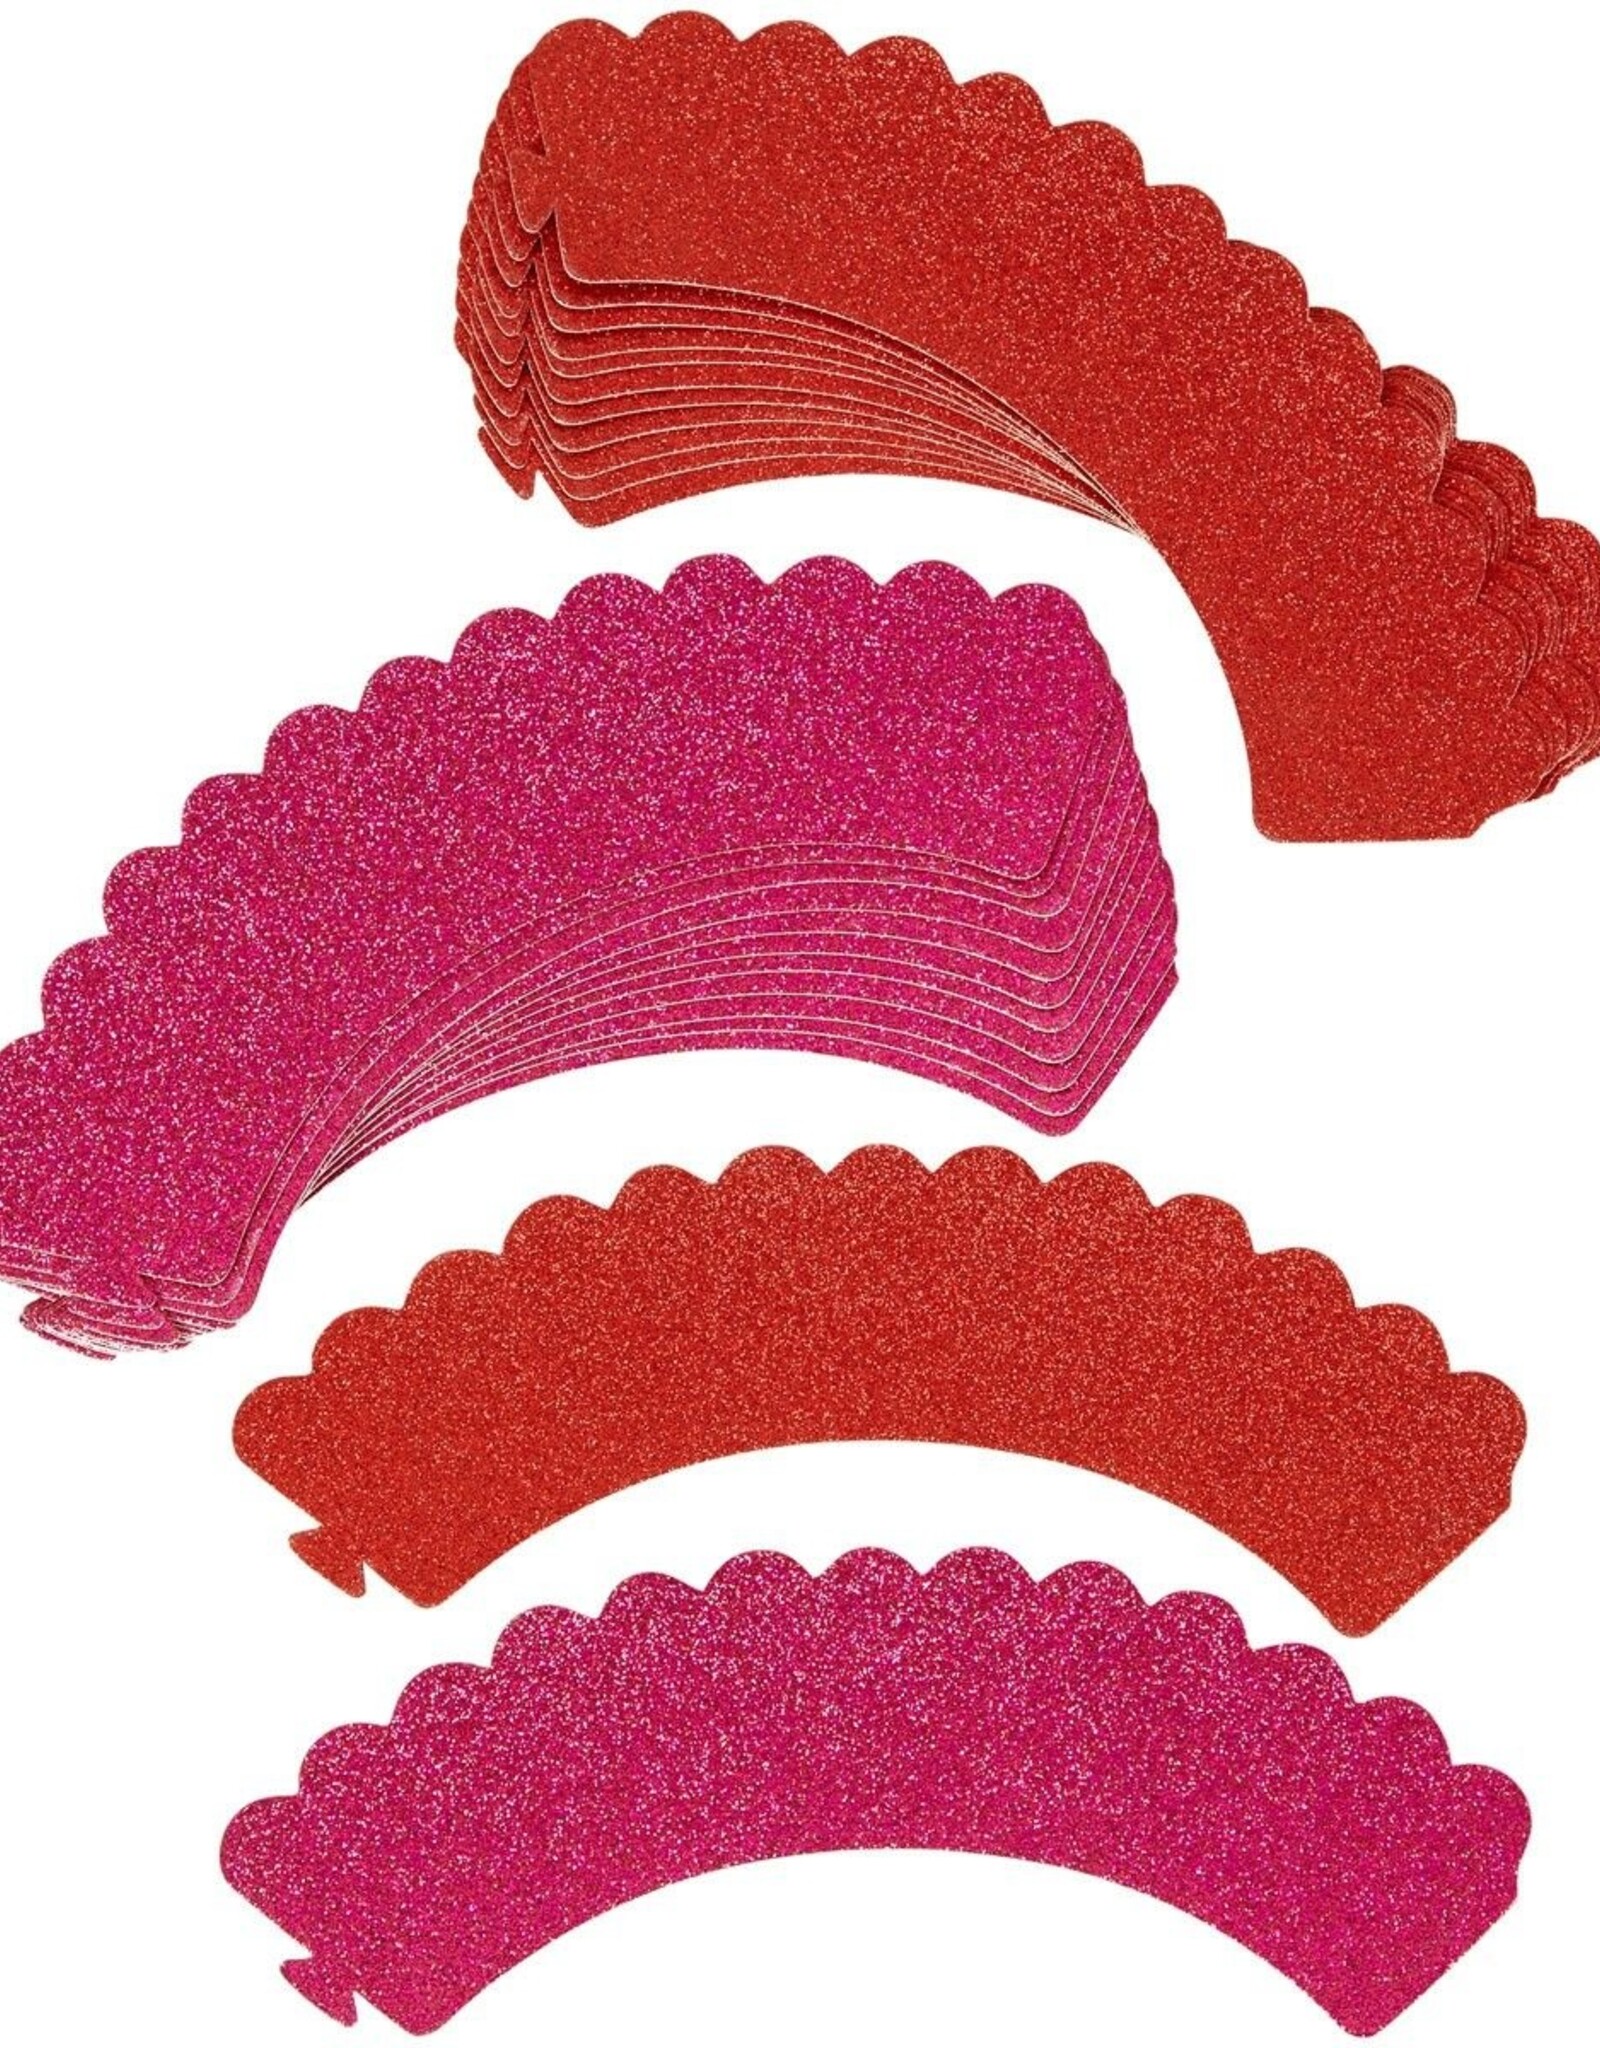 Wilton Wilton Cupcake Wrappers Glitter Red & Pink pk/24